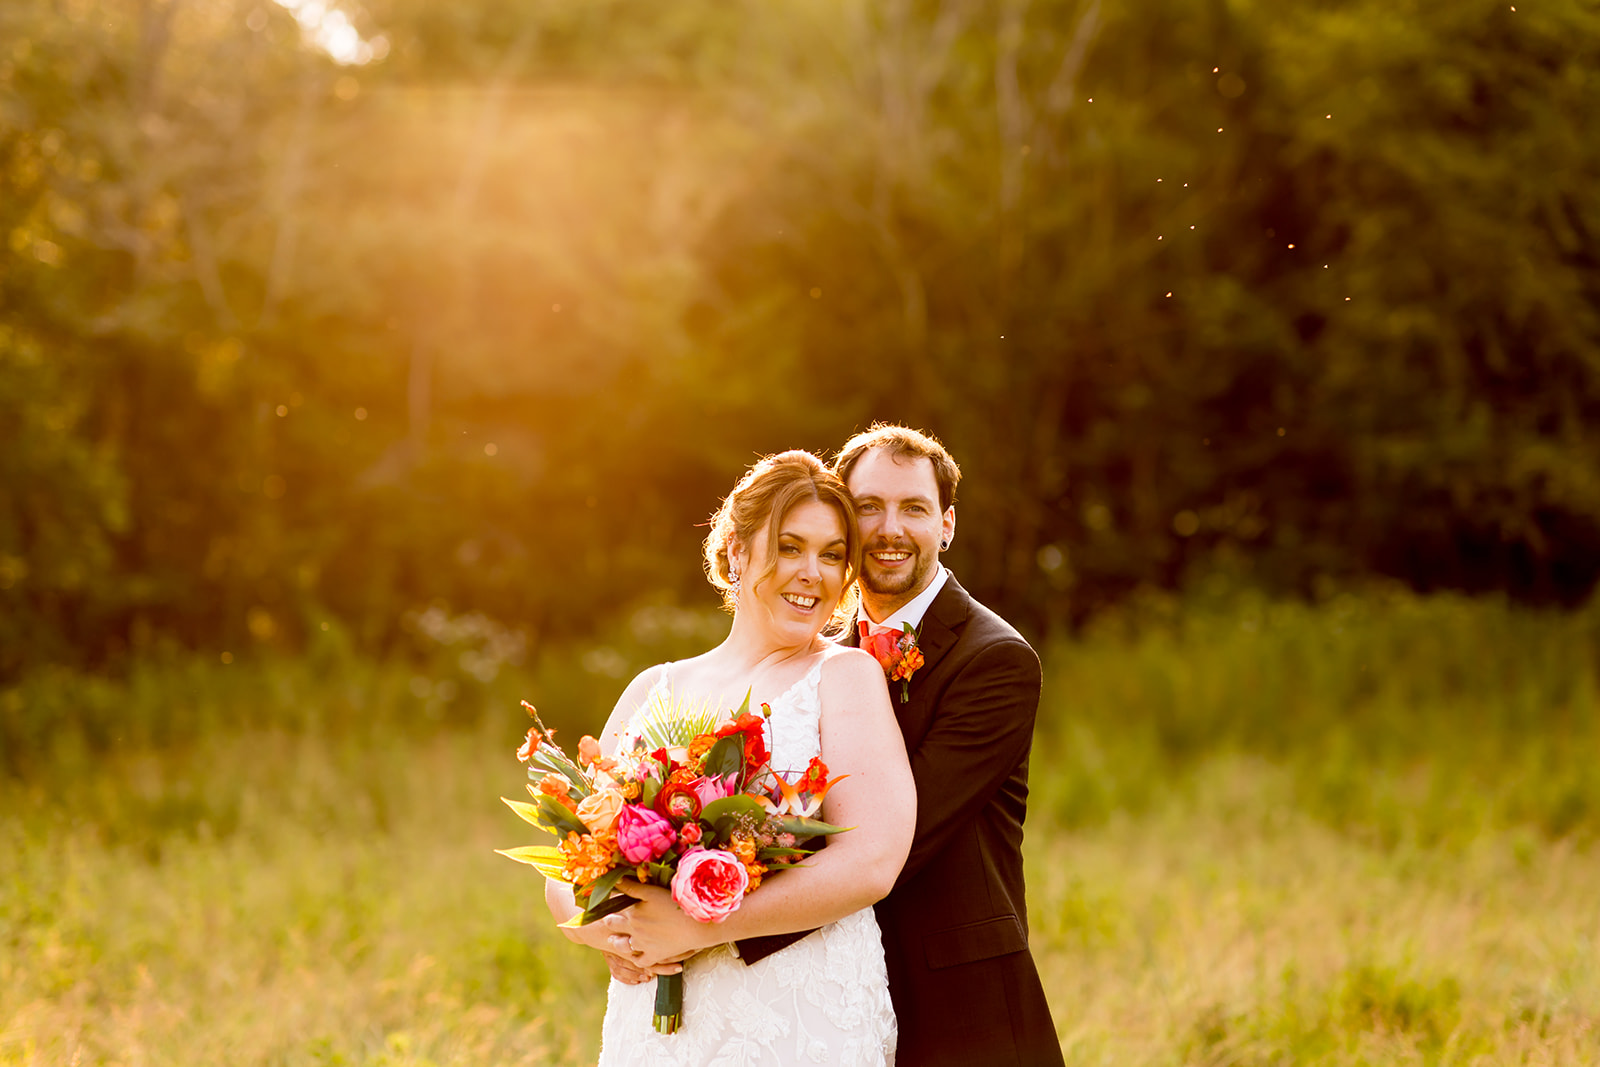 Jessica Hayman Photography, Hampshire wedding photographer. Vibrant wedding hour photography.